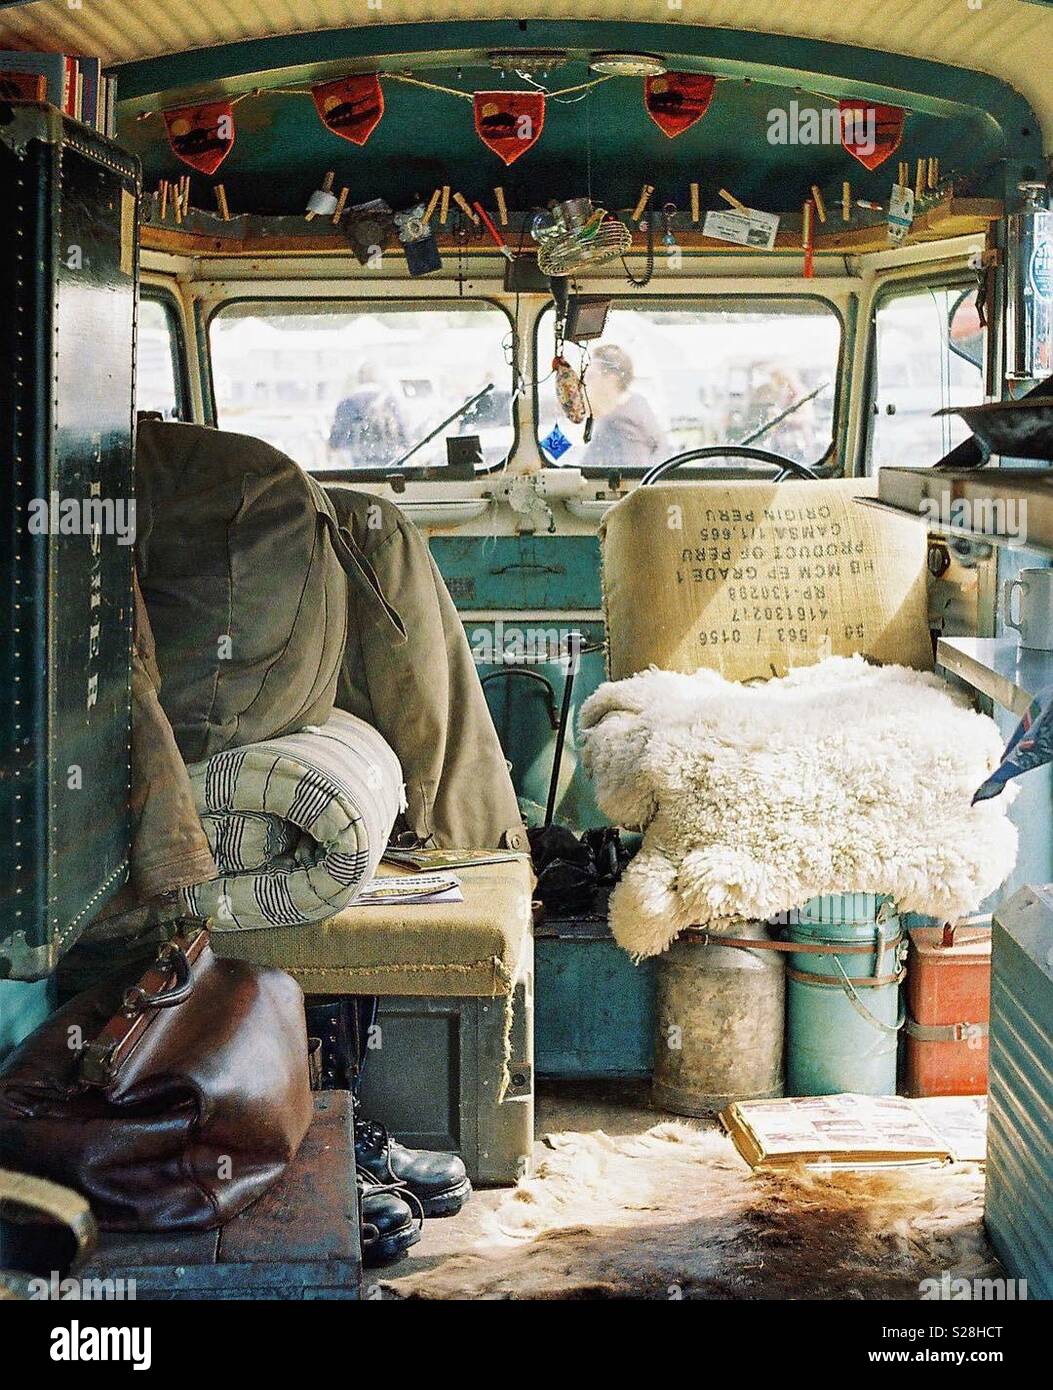 Classic Citroen H van converted into a bespoke camper Stock Photo - Alamy